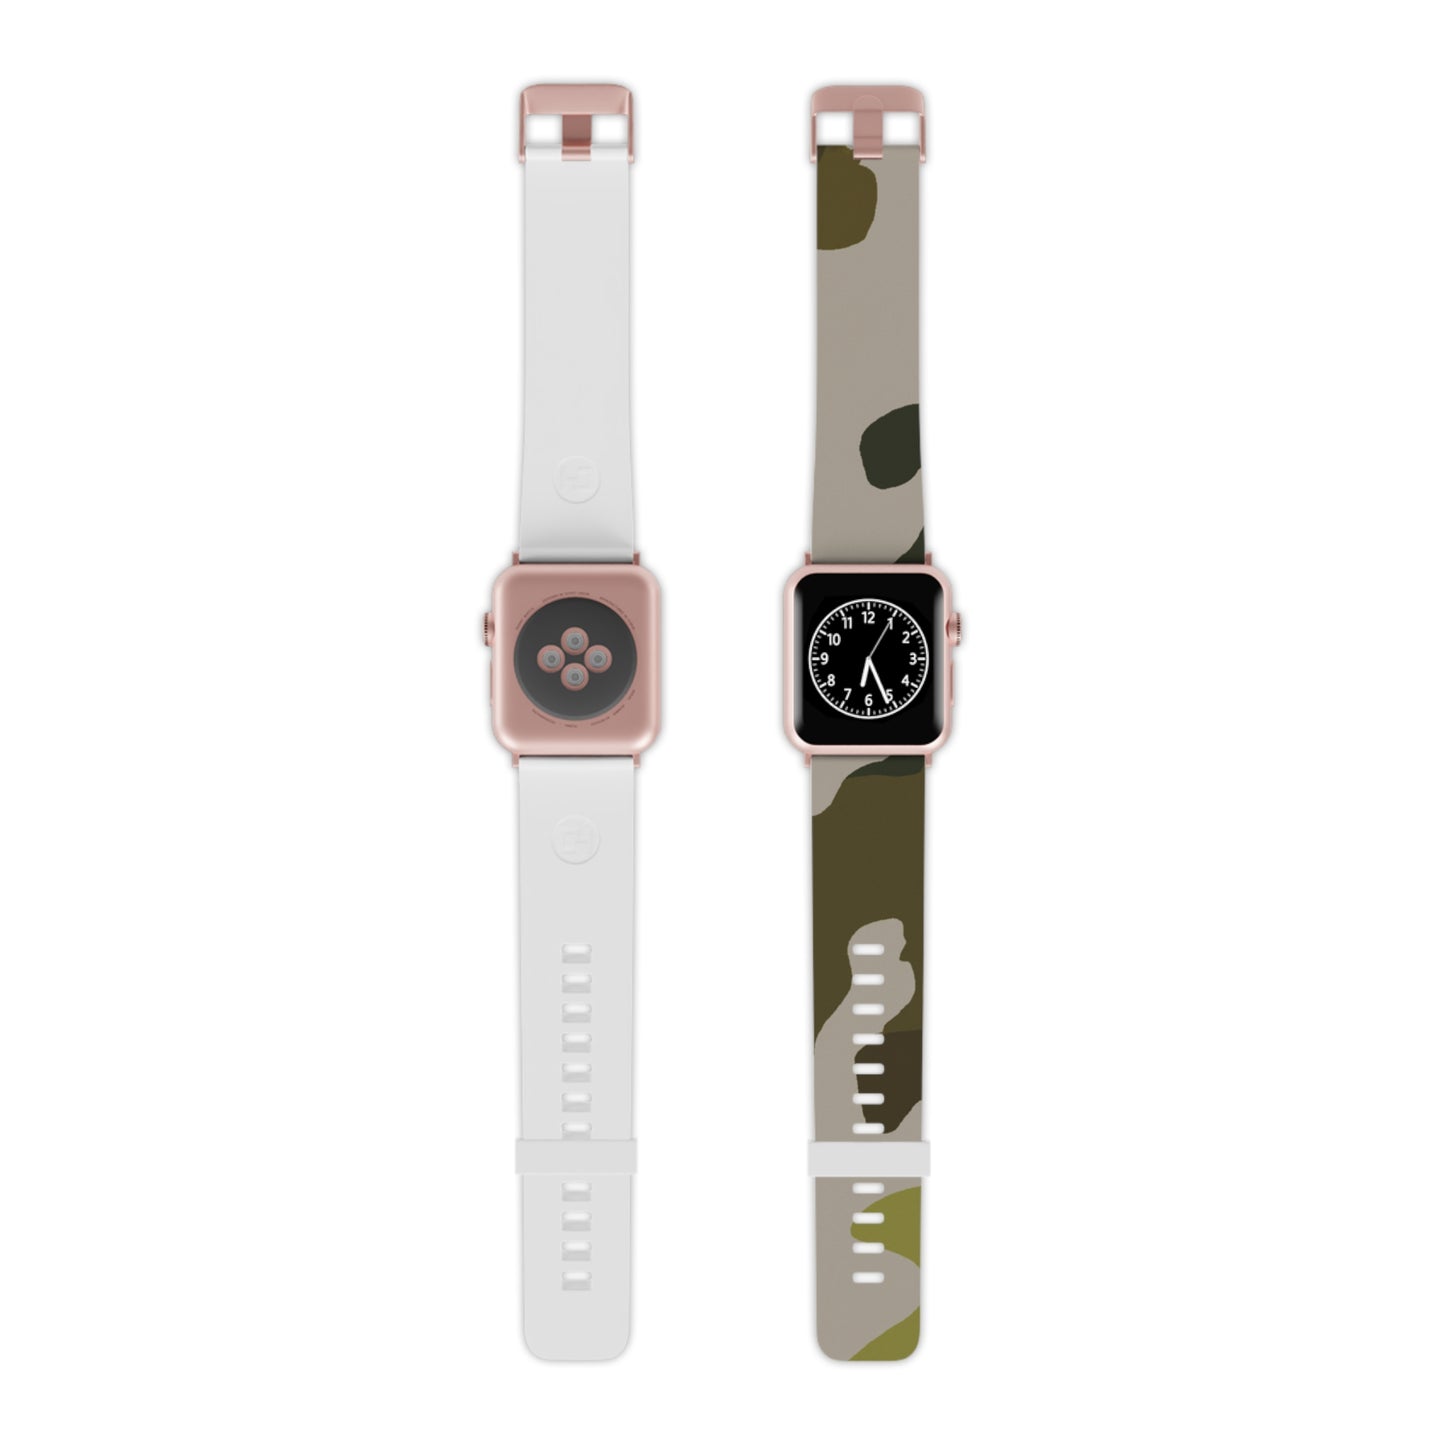 Benjamin Angler - Camouflage Apple Wrist Watch Band